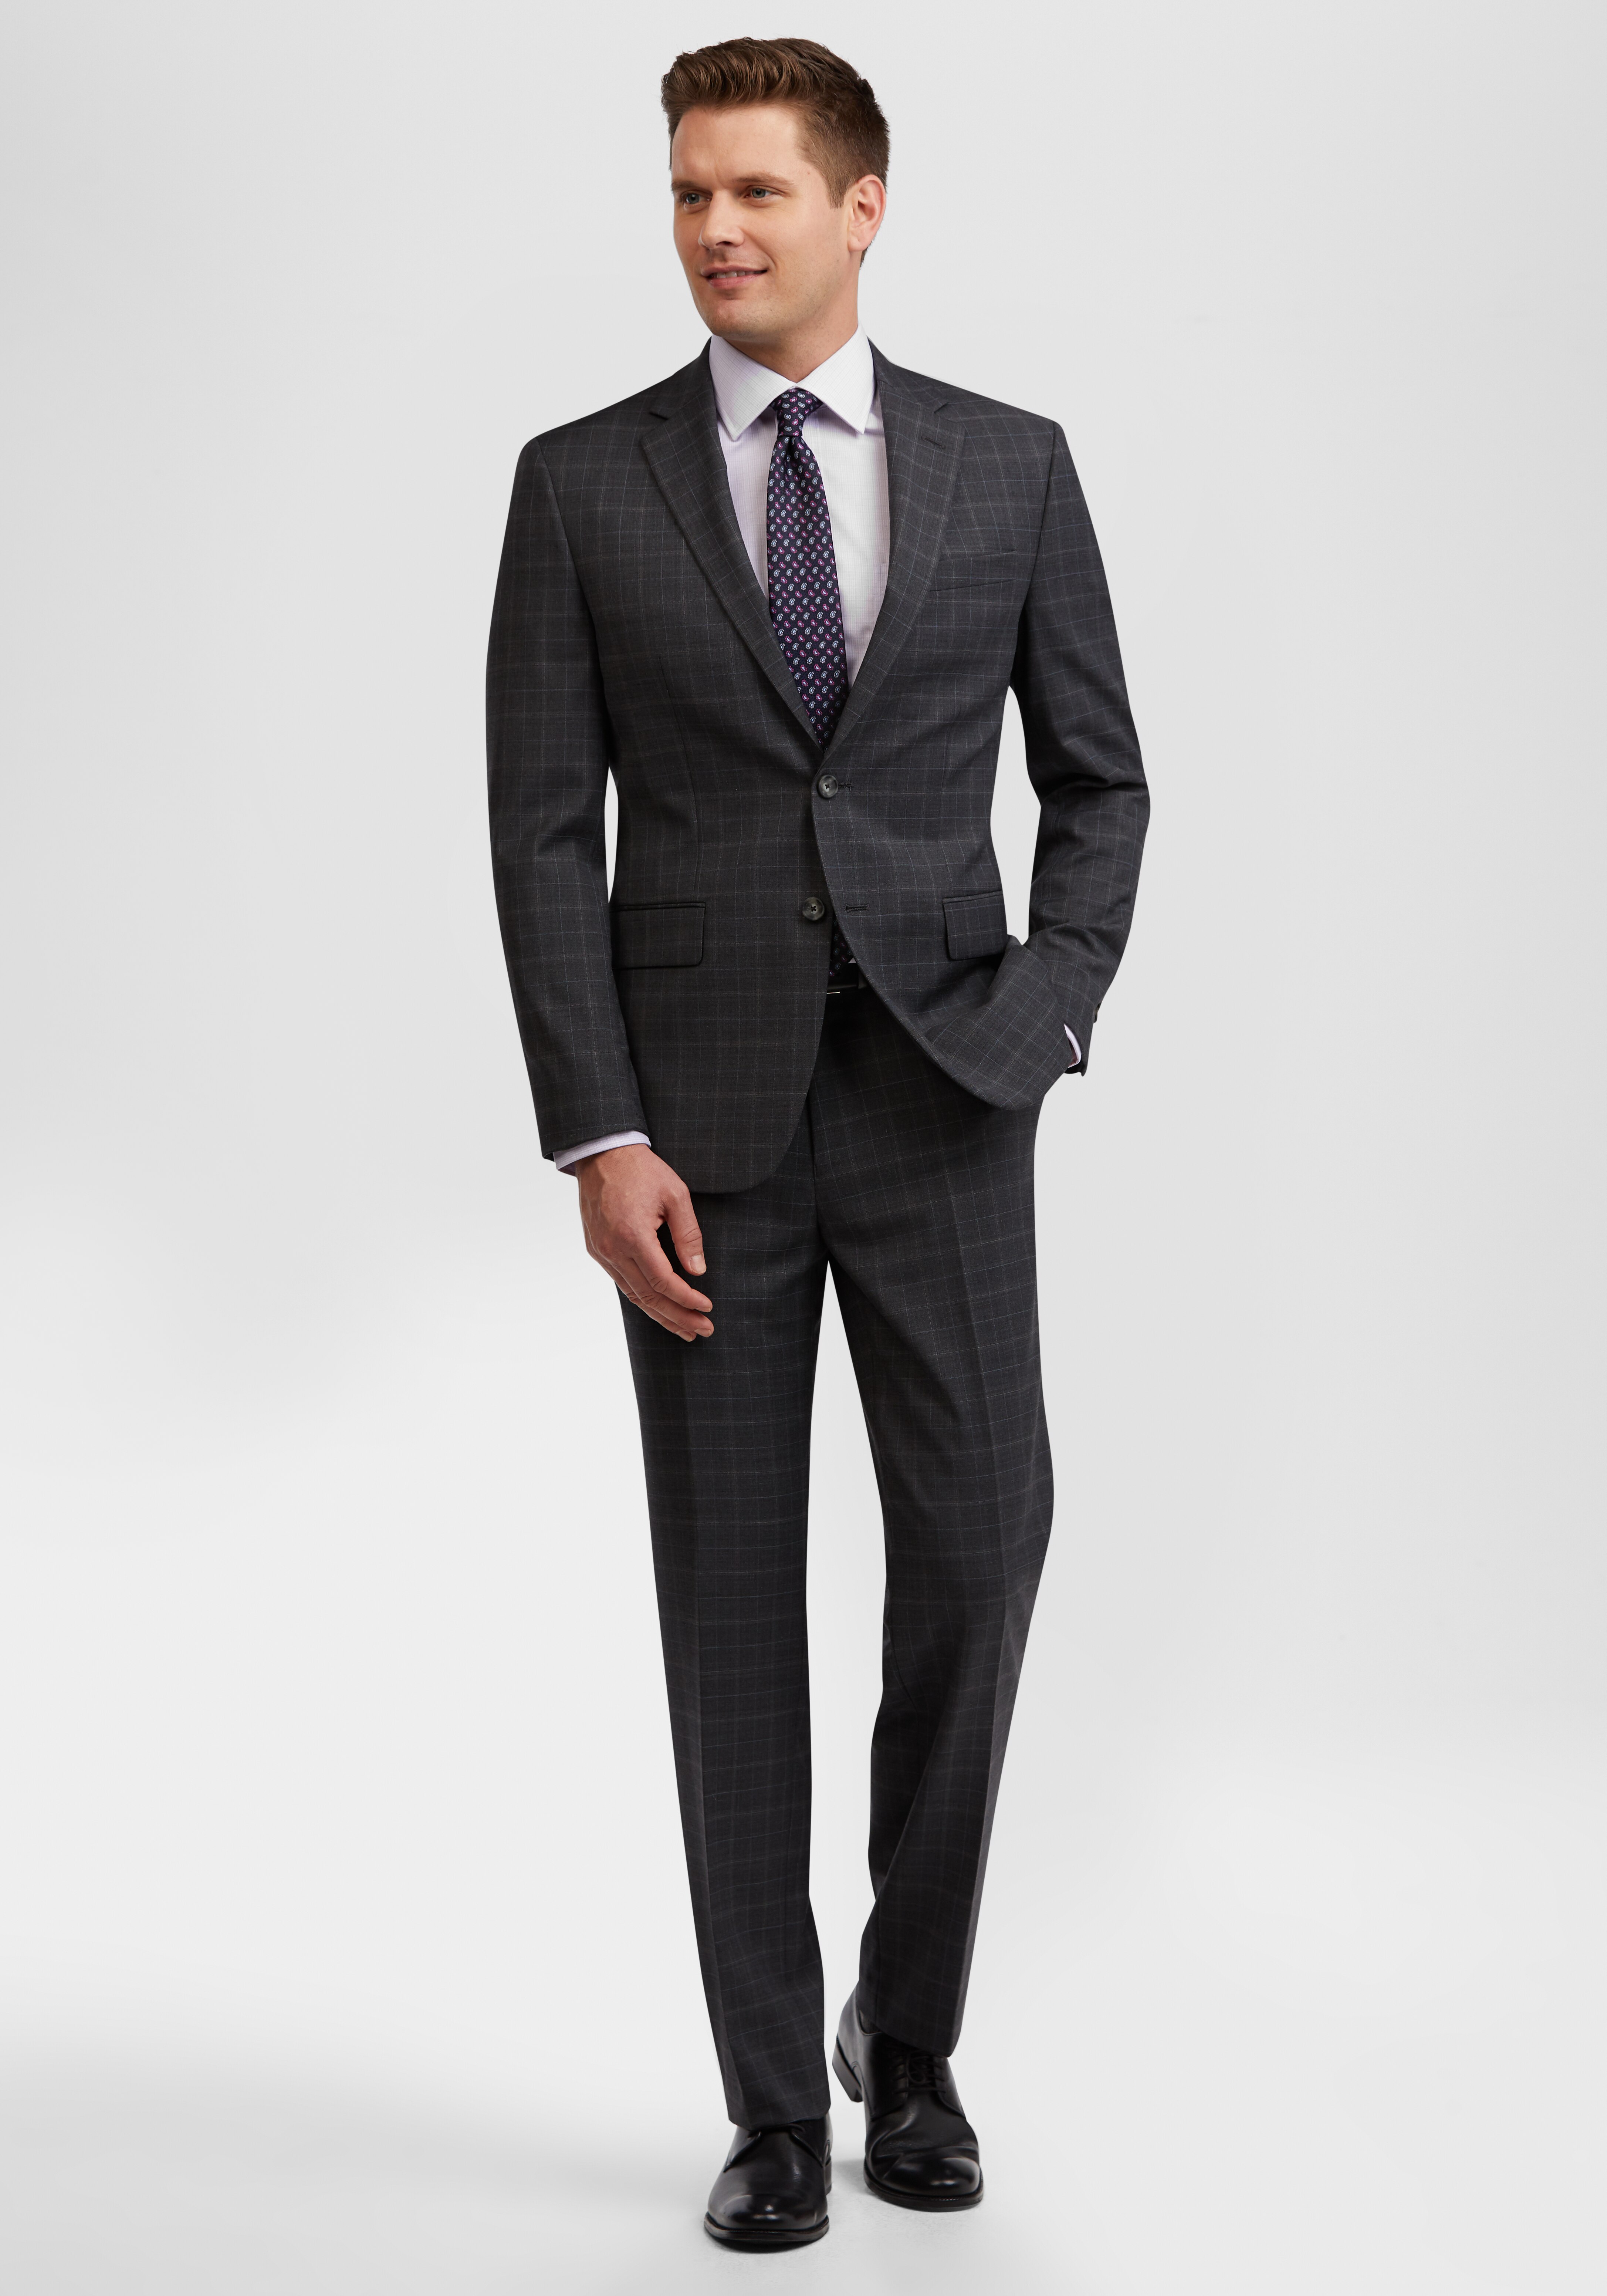 Download Men's Suits | JoS. A. Bank